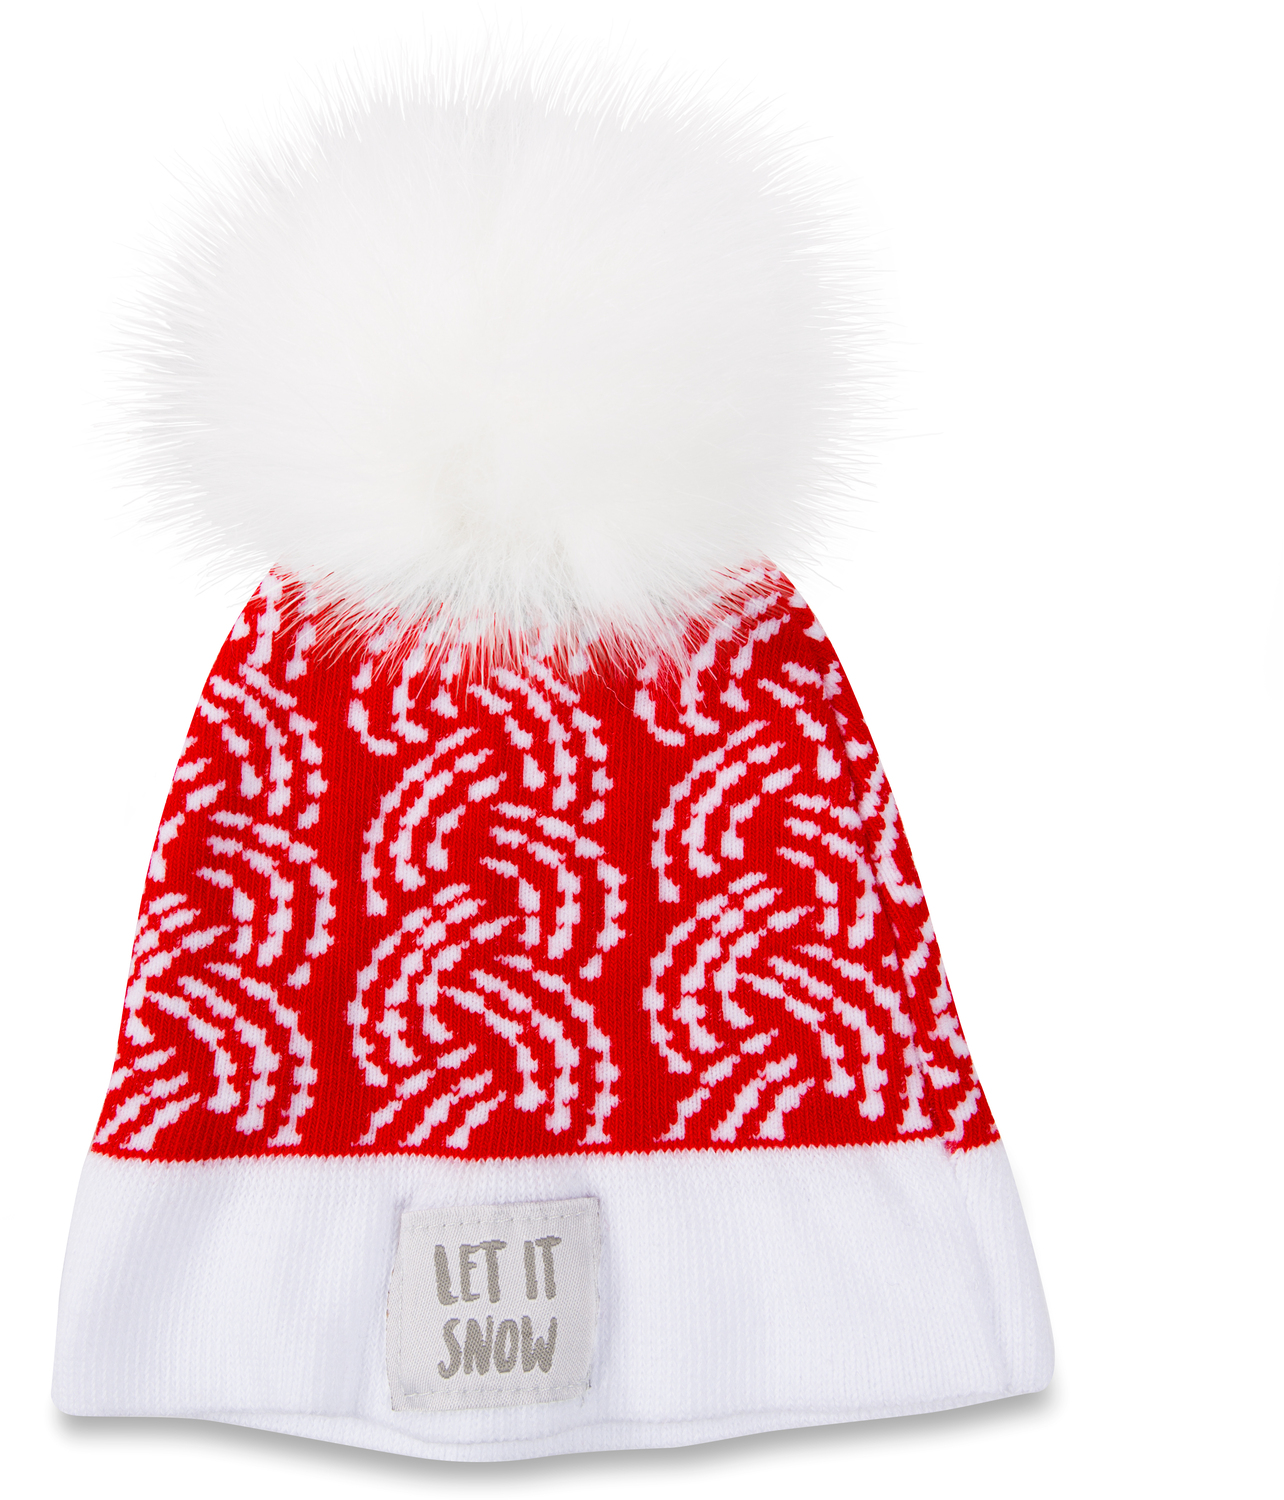 Let it Snow by Sidewalk Talk - Let it Snow - Red Knit Pom Pom Hat
(12-24 Months)